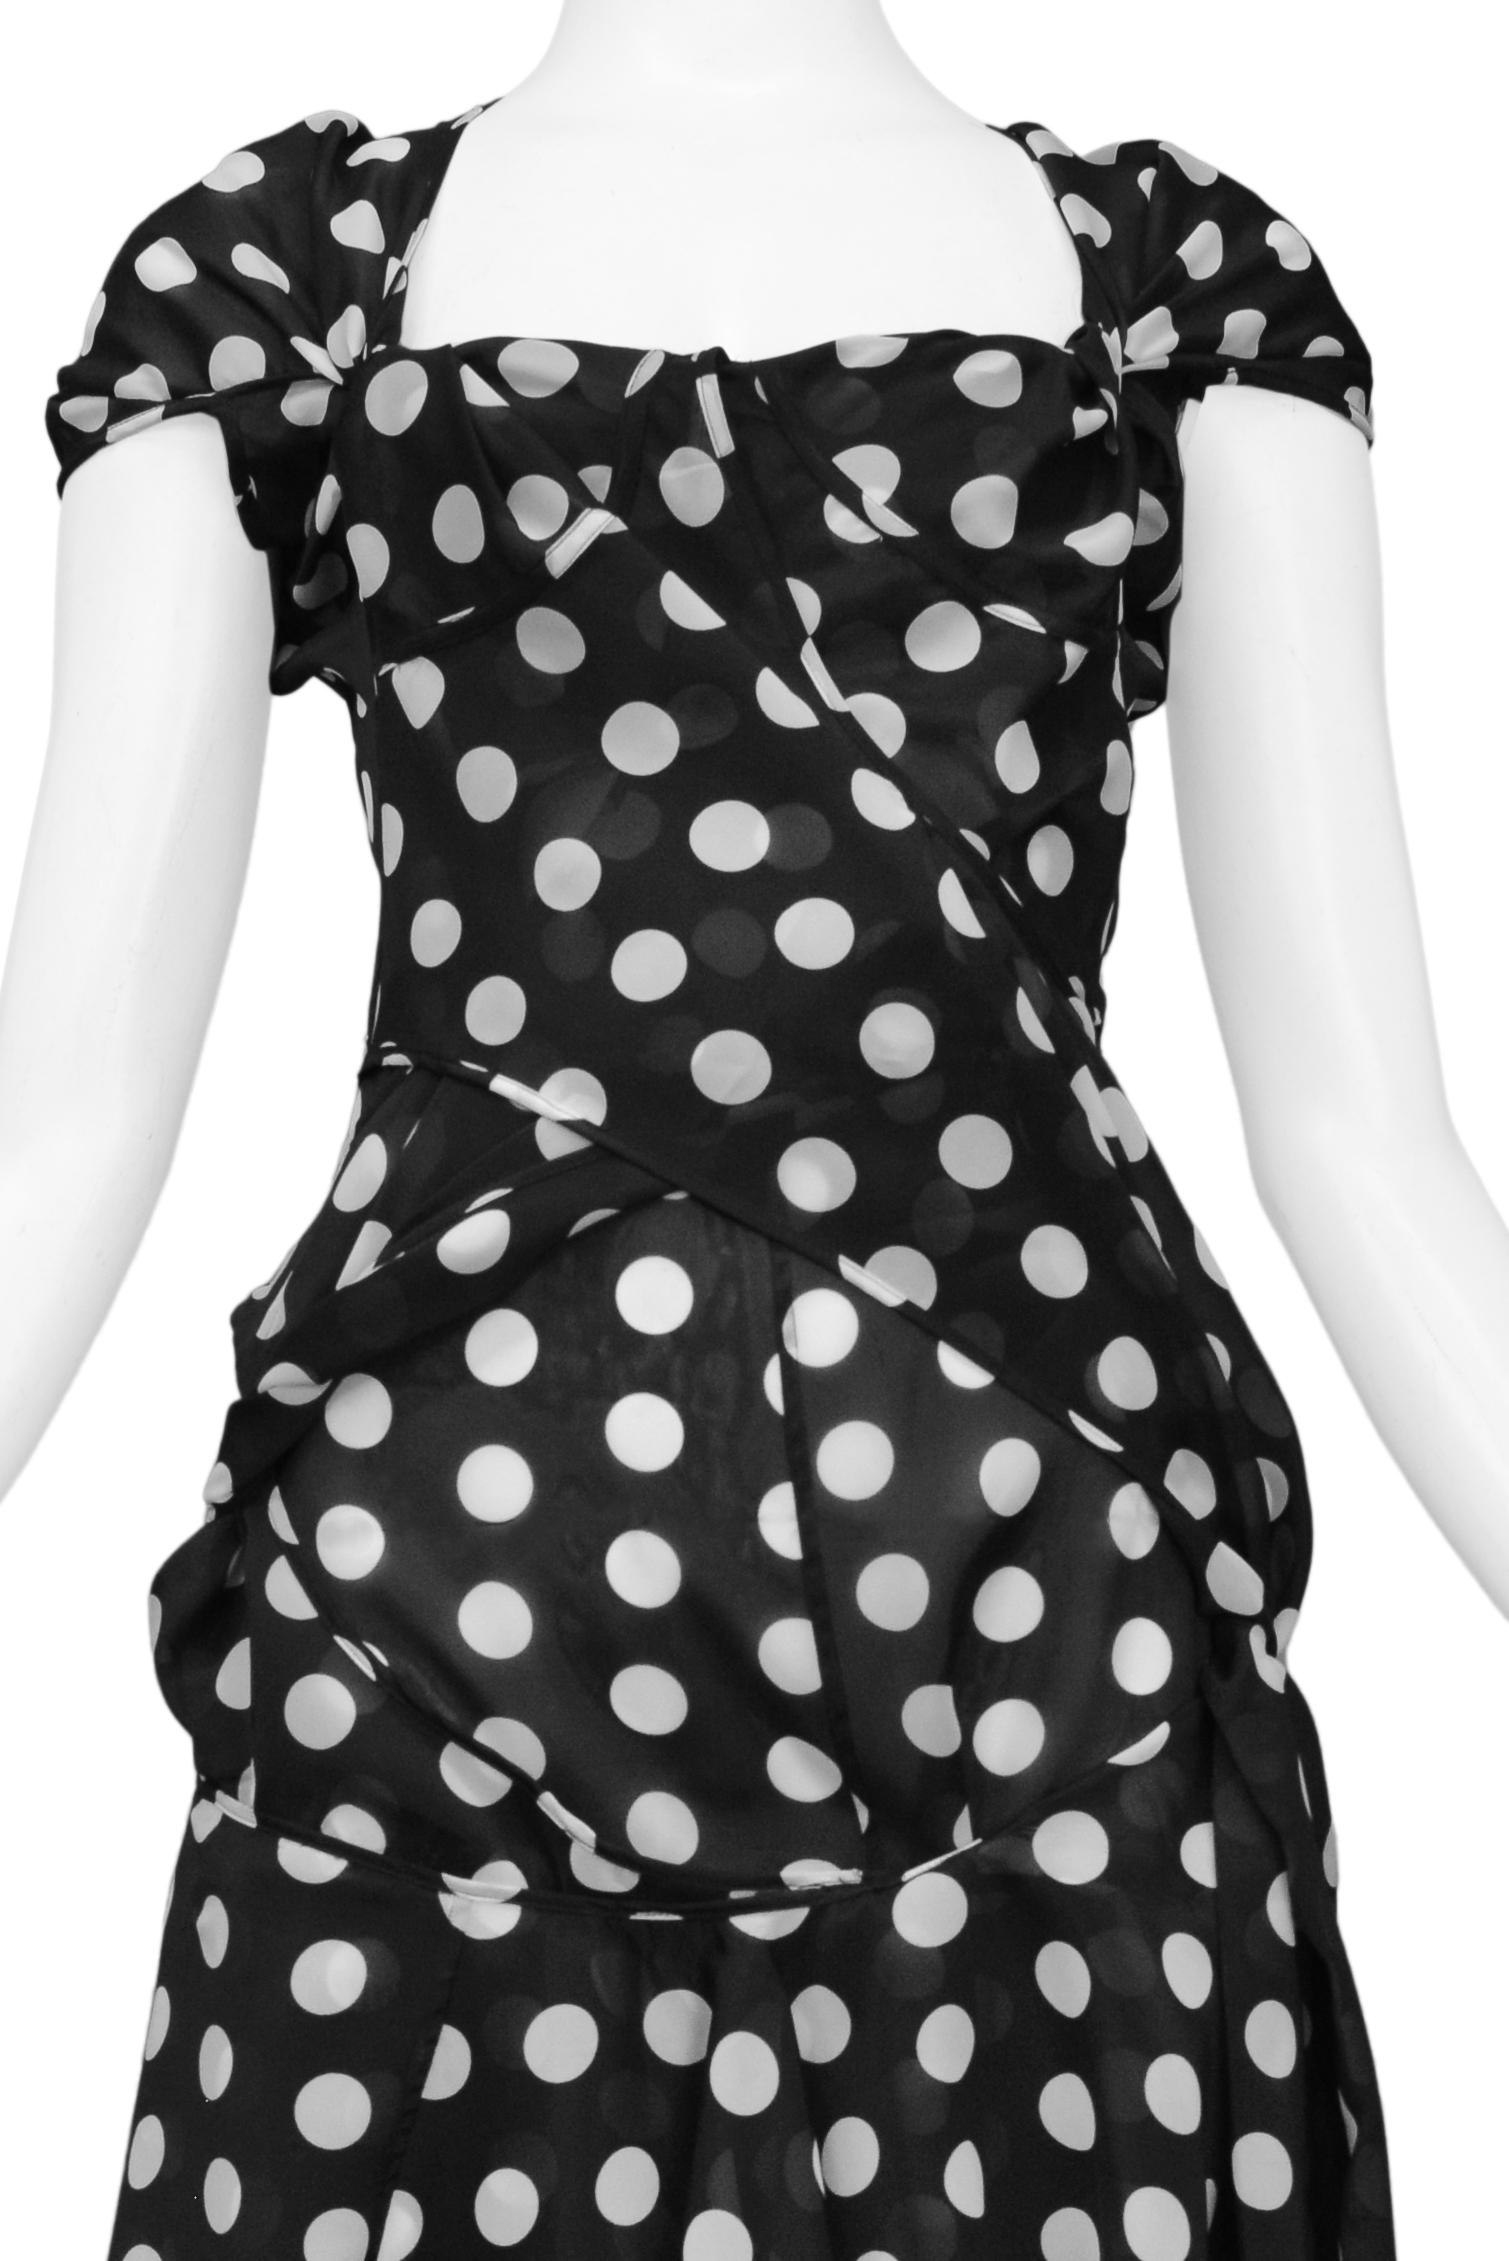 Junya Watanabe Black & White Polka Dot Concept Dress 2004 For Sale 1